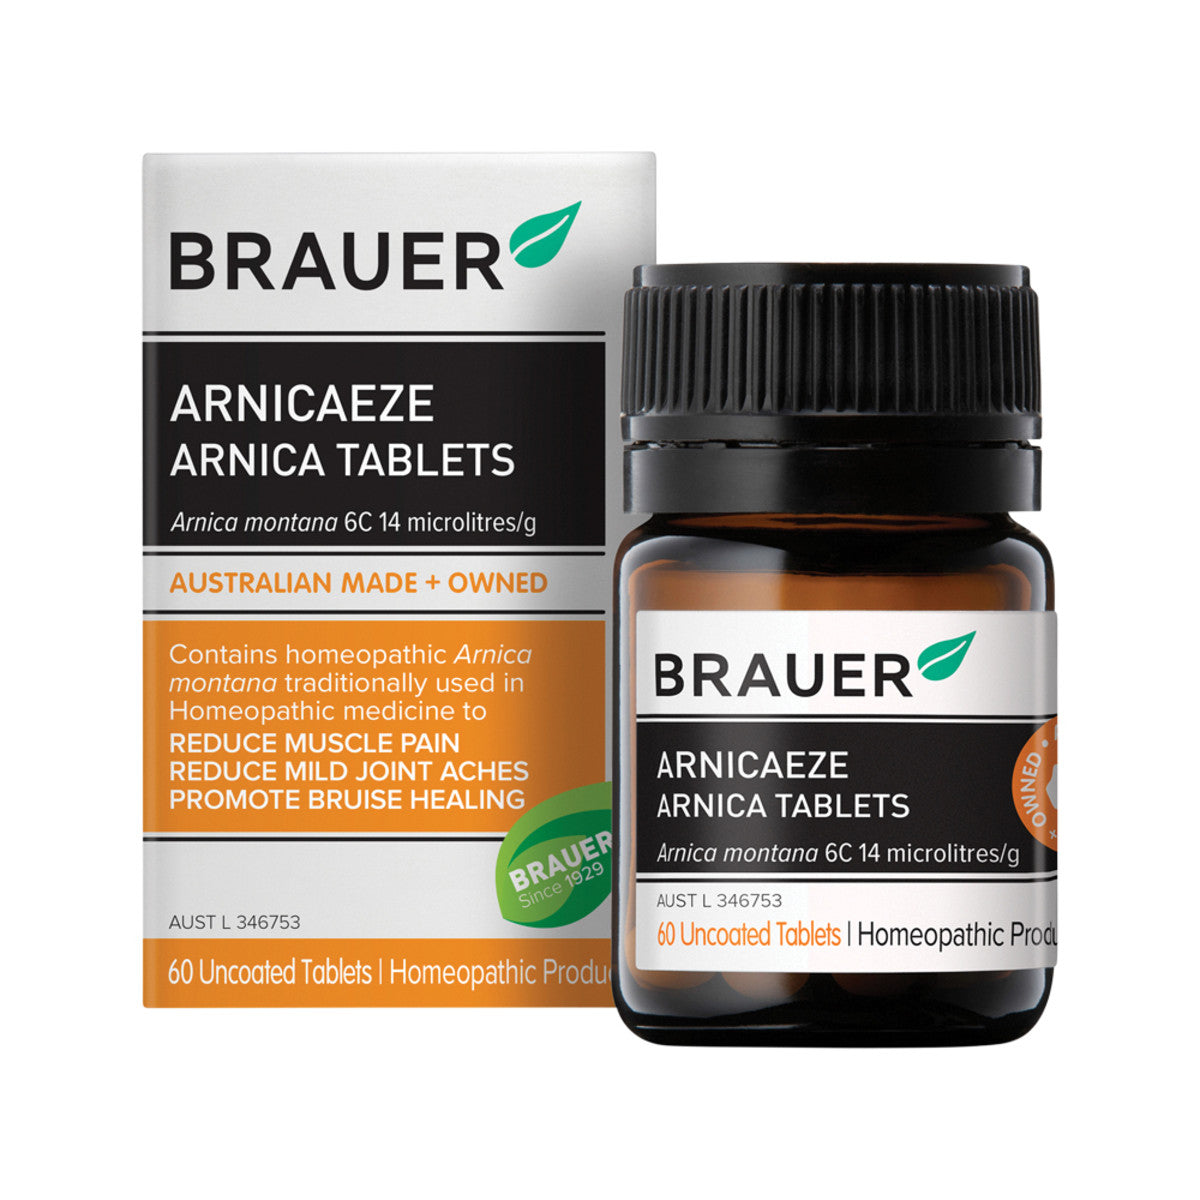 Brauer - ArnicaEze Arnica Tablets 6C